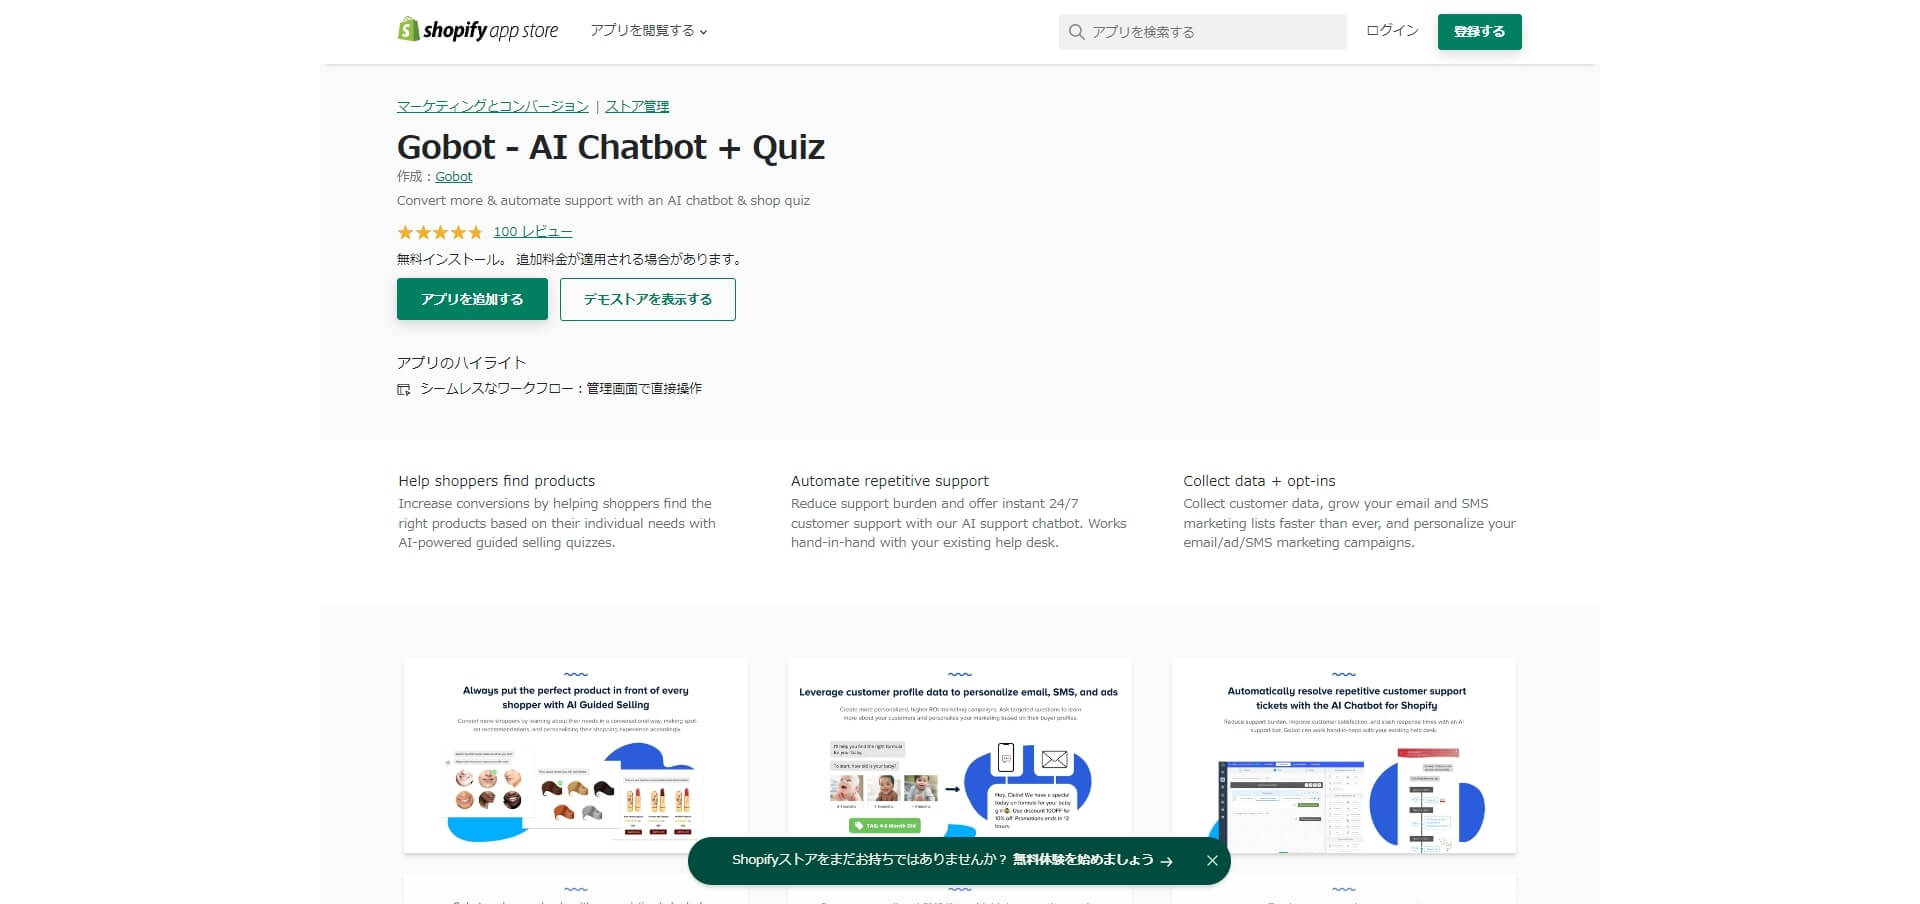 Gobot - AI Chatbot + Quiz